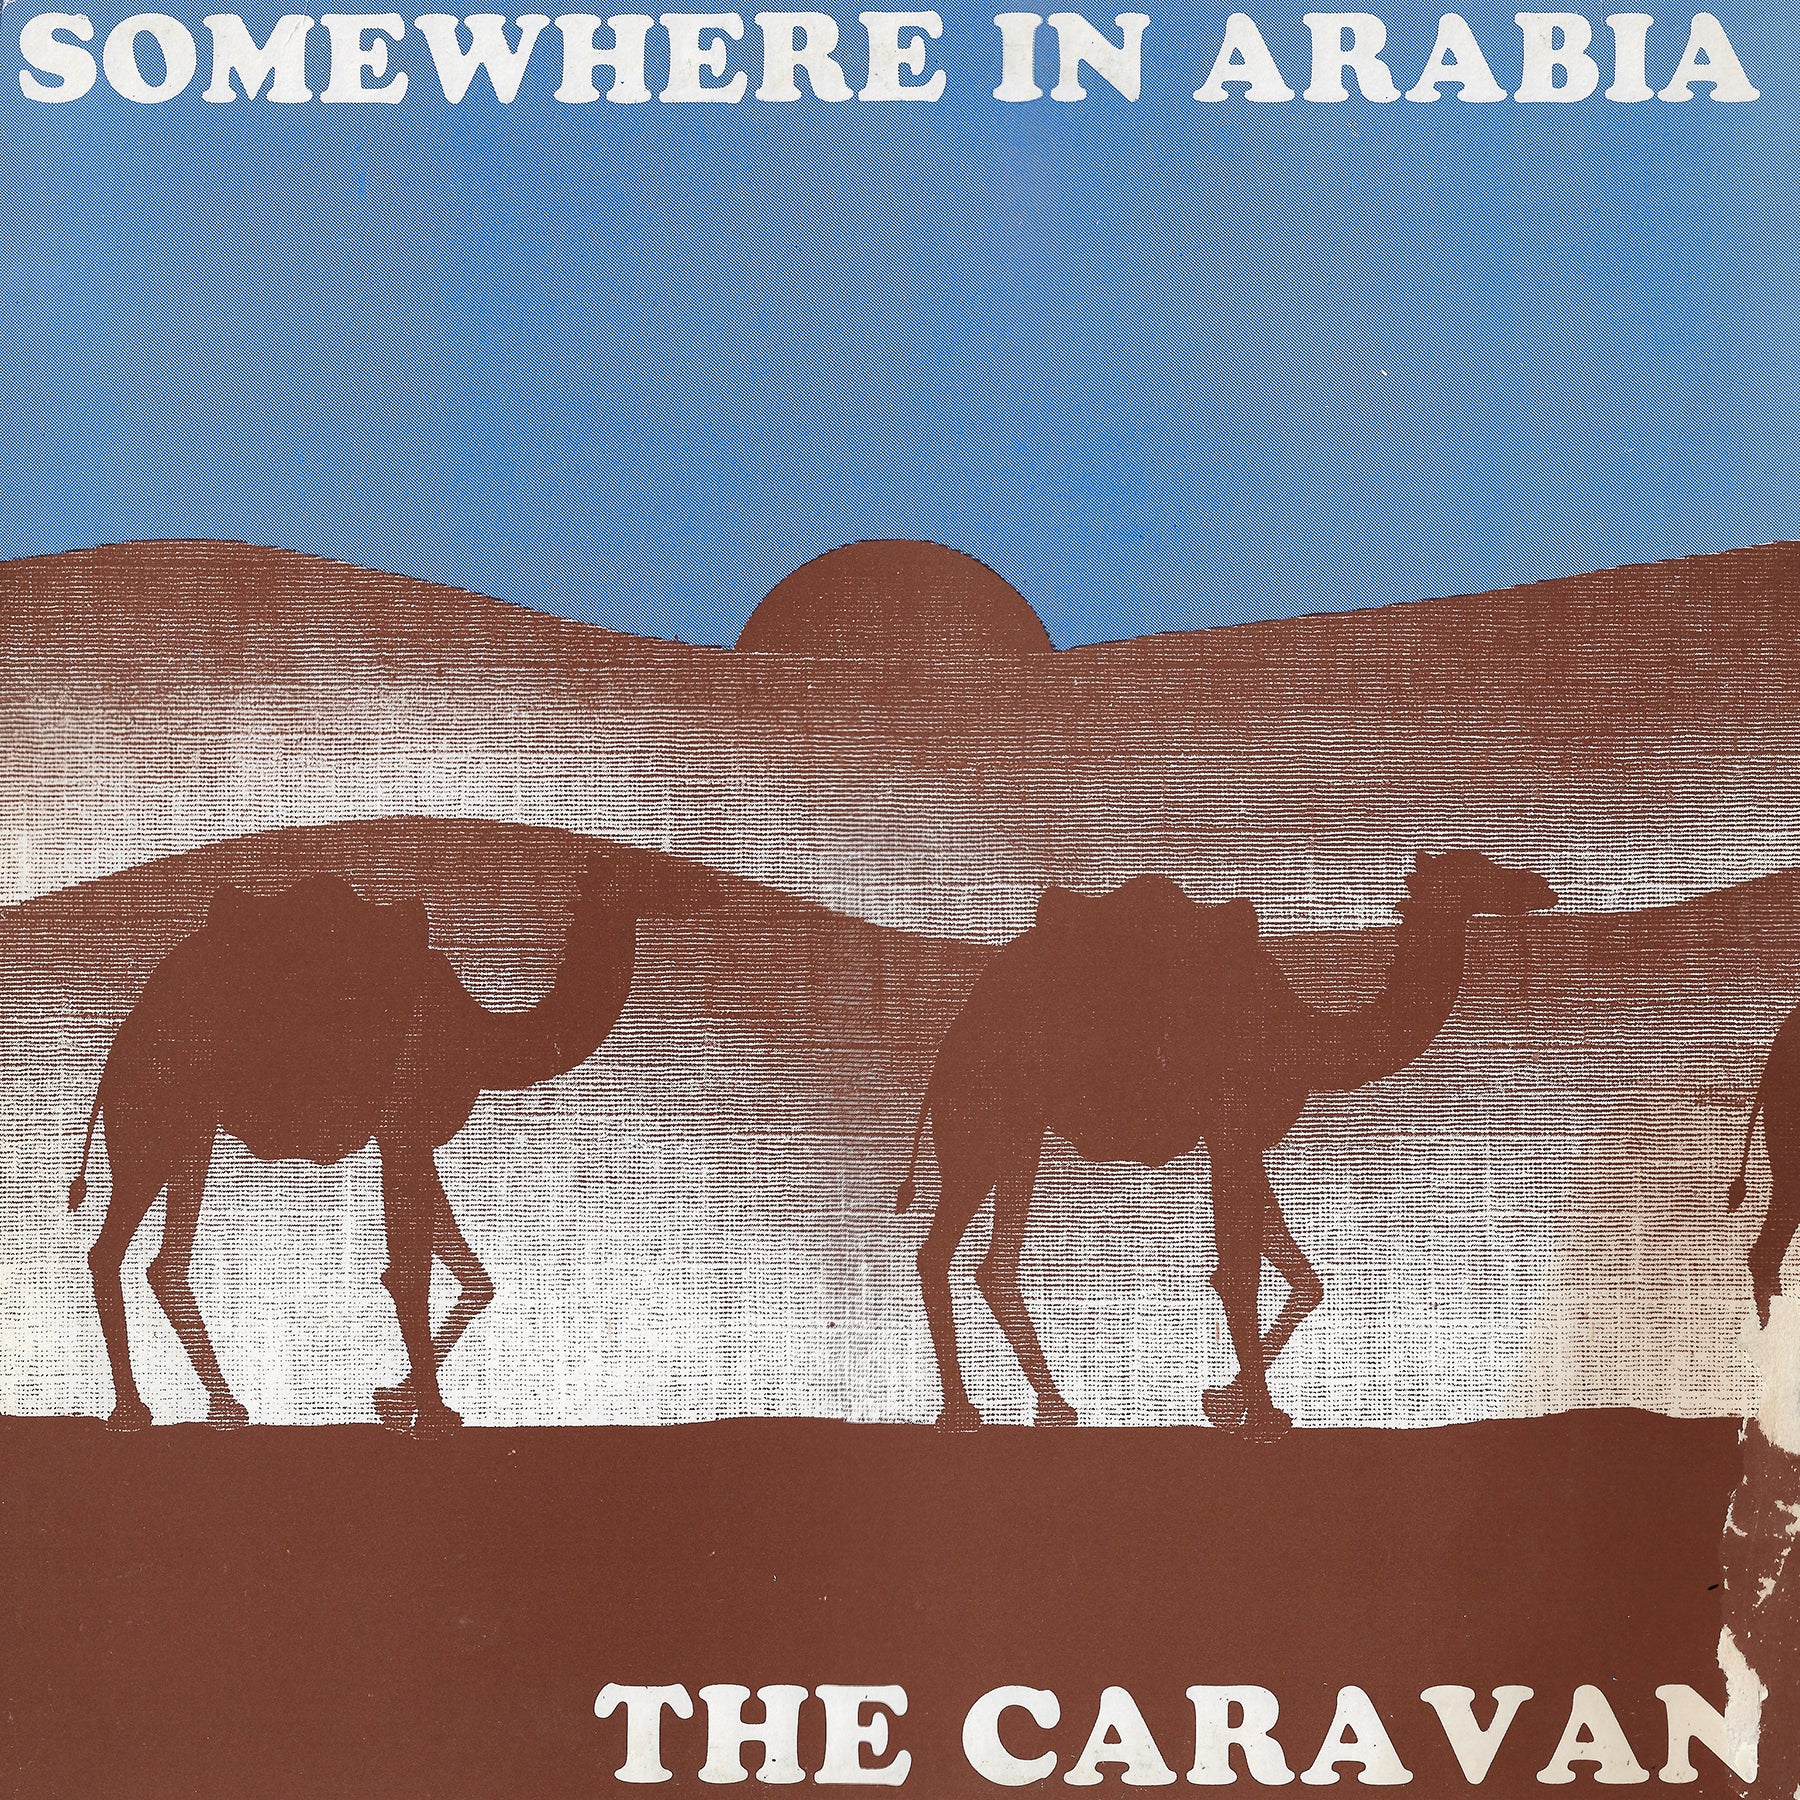 The Caravan - Somewhere In Arabia